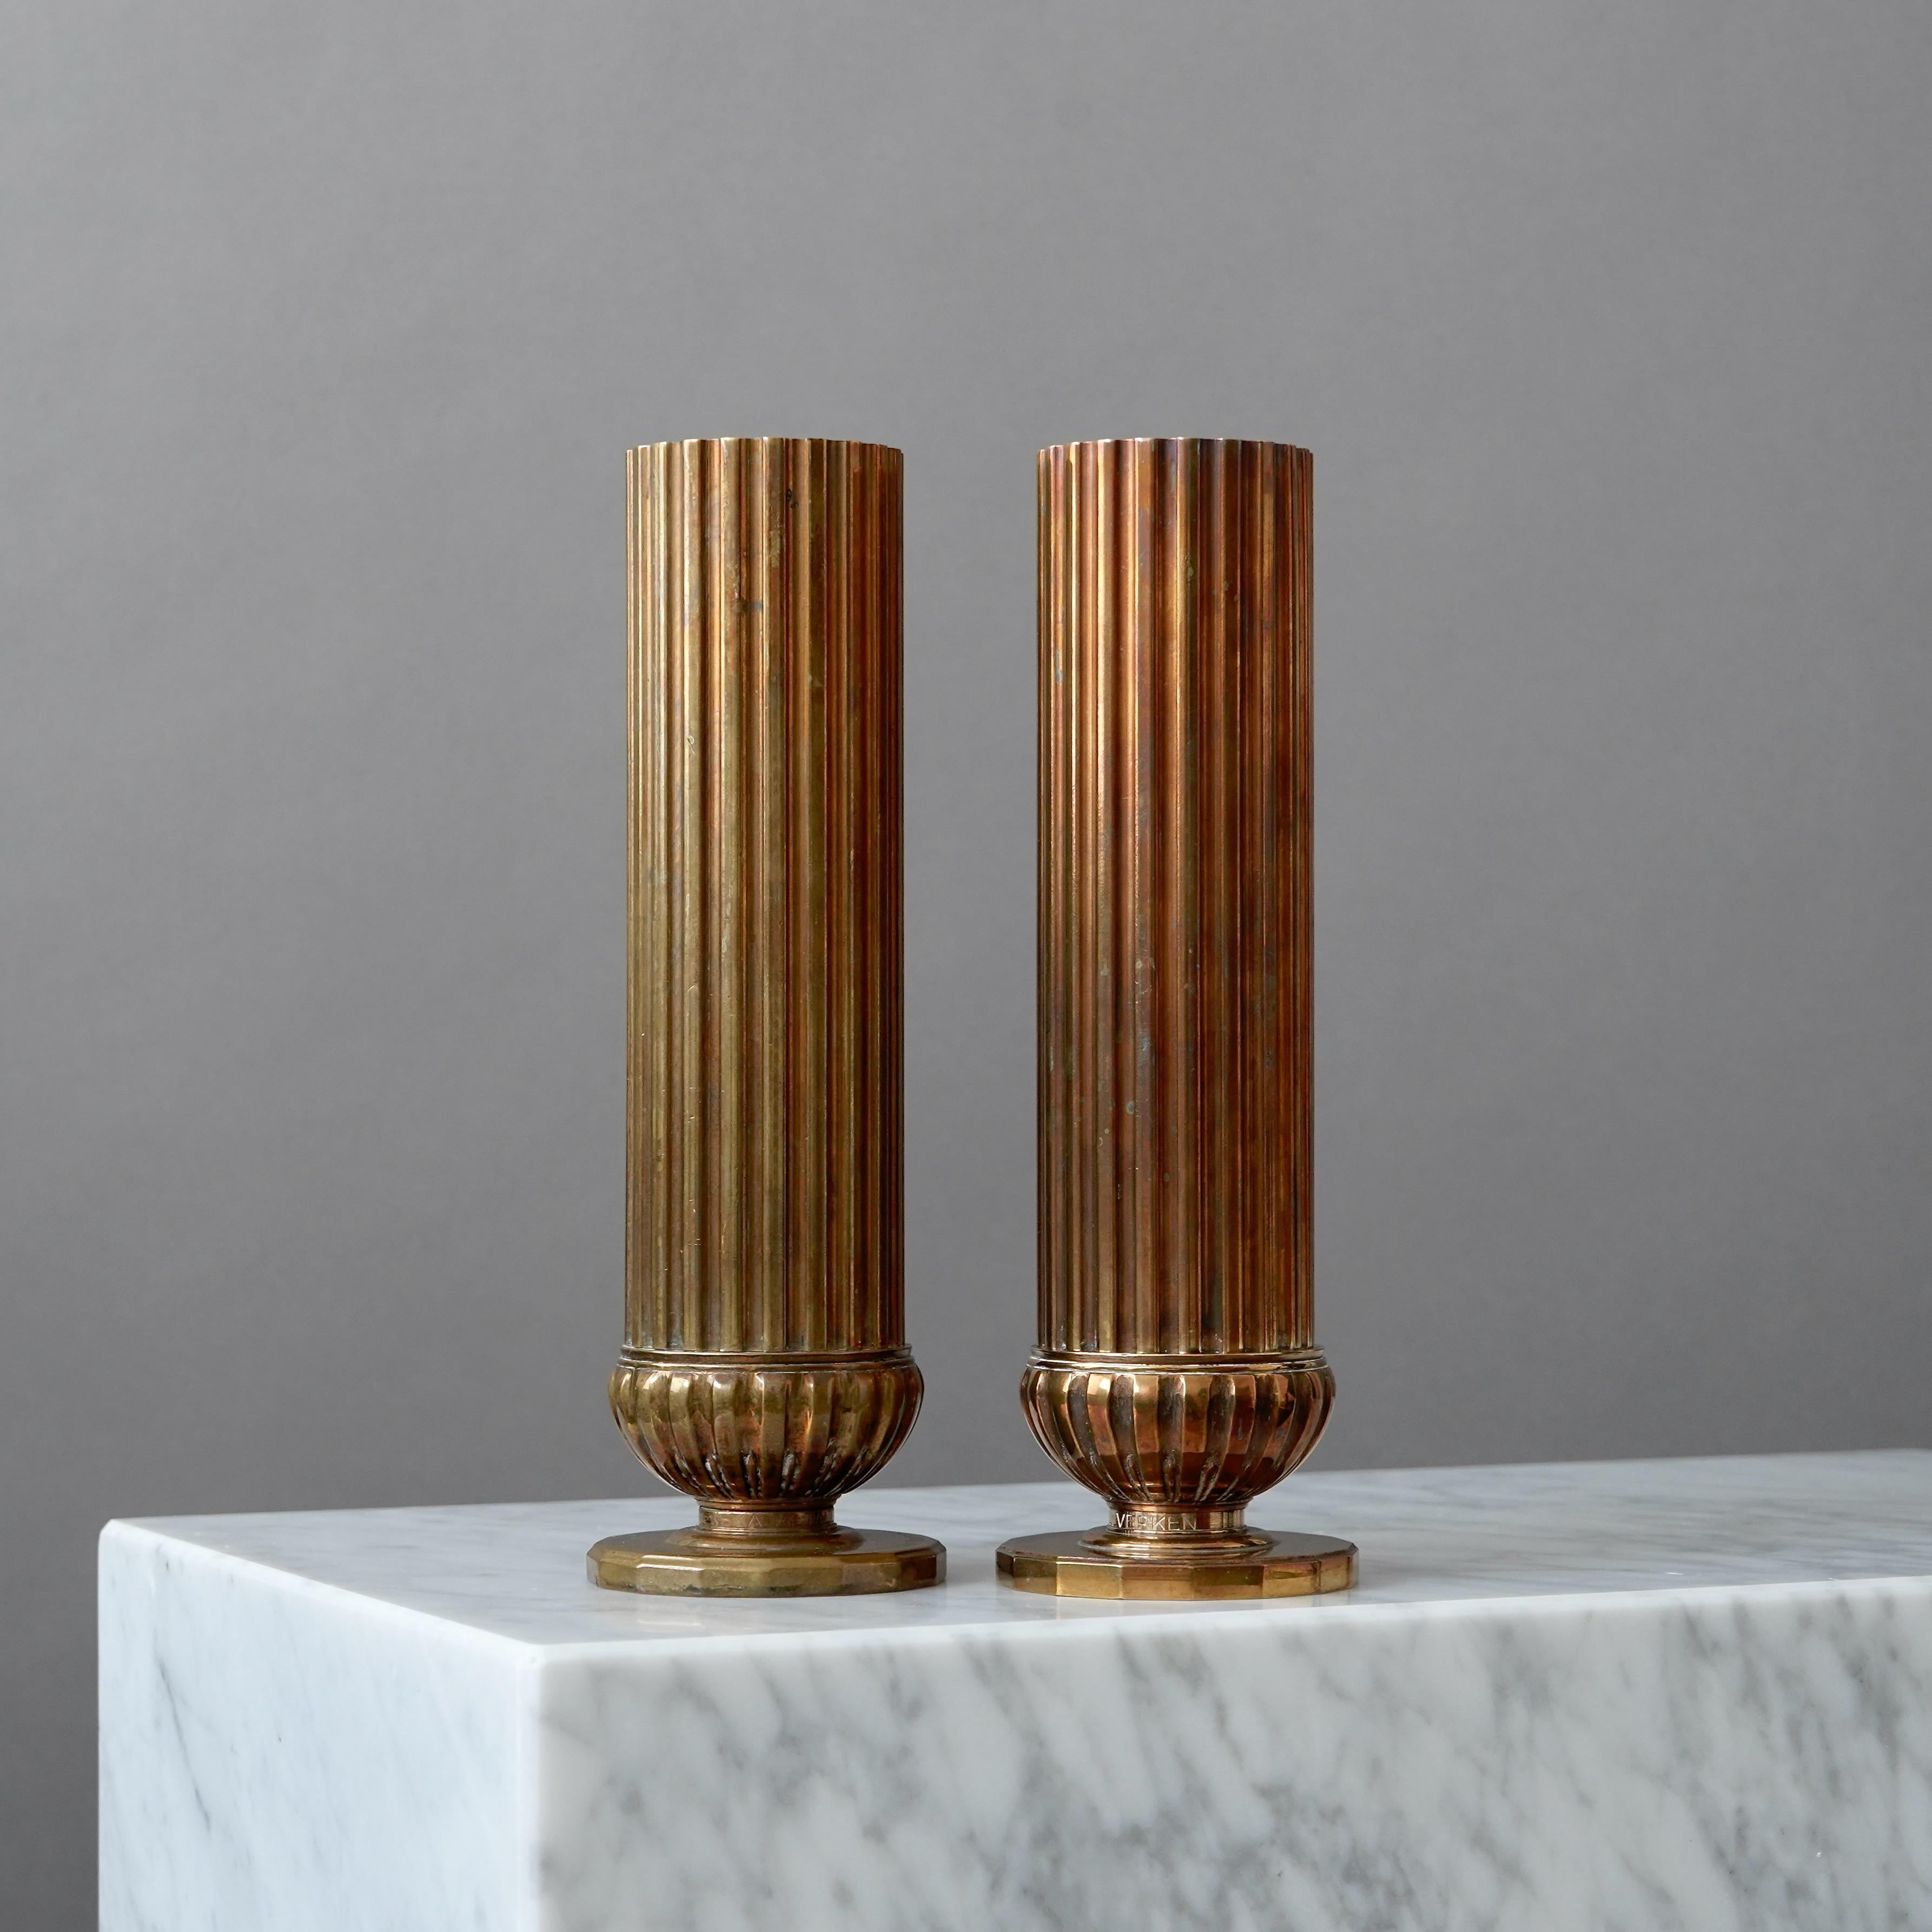 Scandinavian Modern A pair of Bronze Art Deco Vases by SVM Handarbete, Sweden, 1930s For Sale